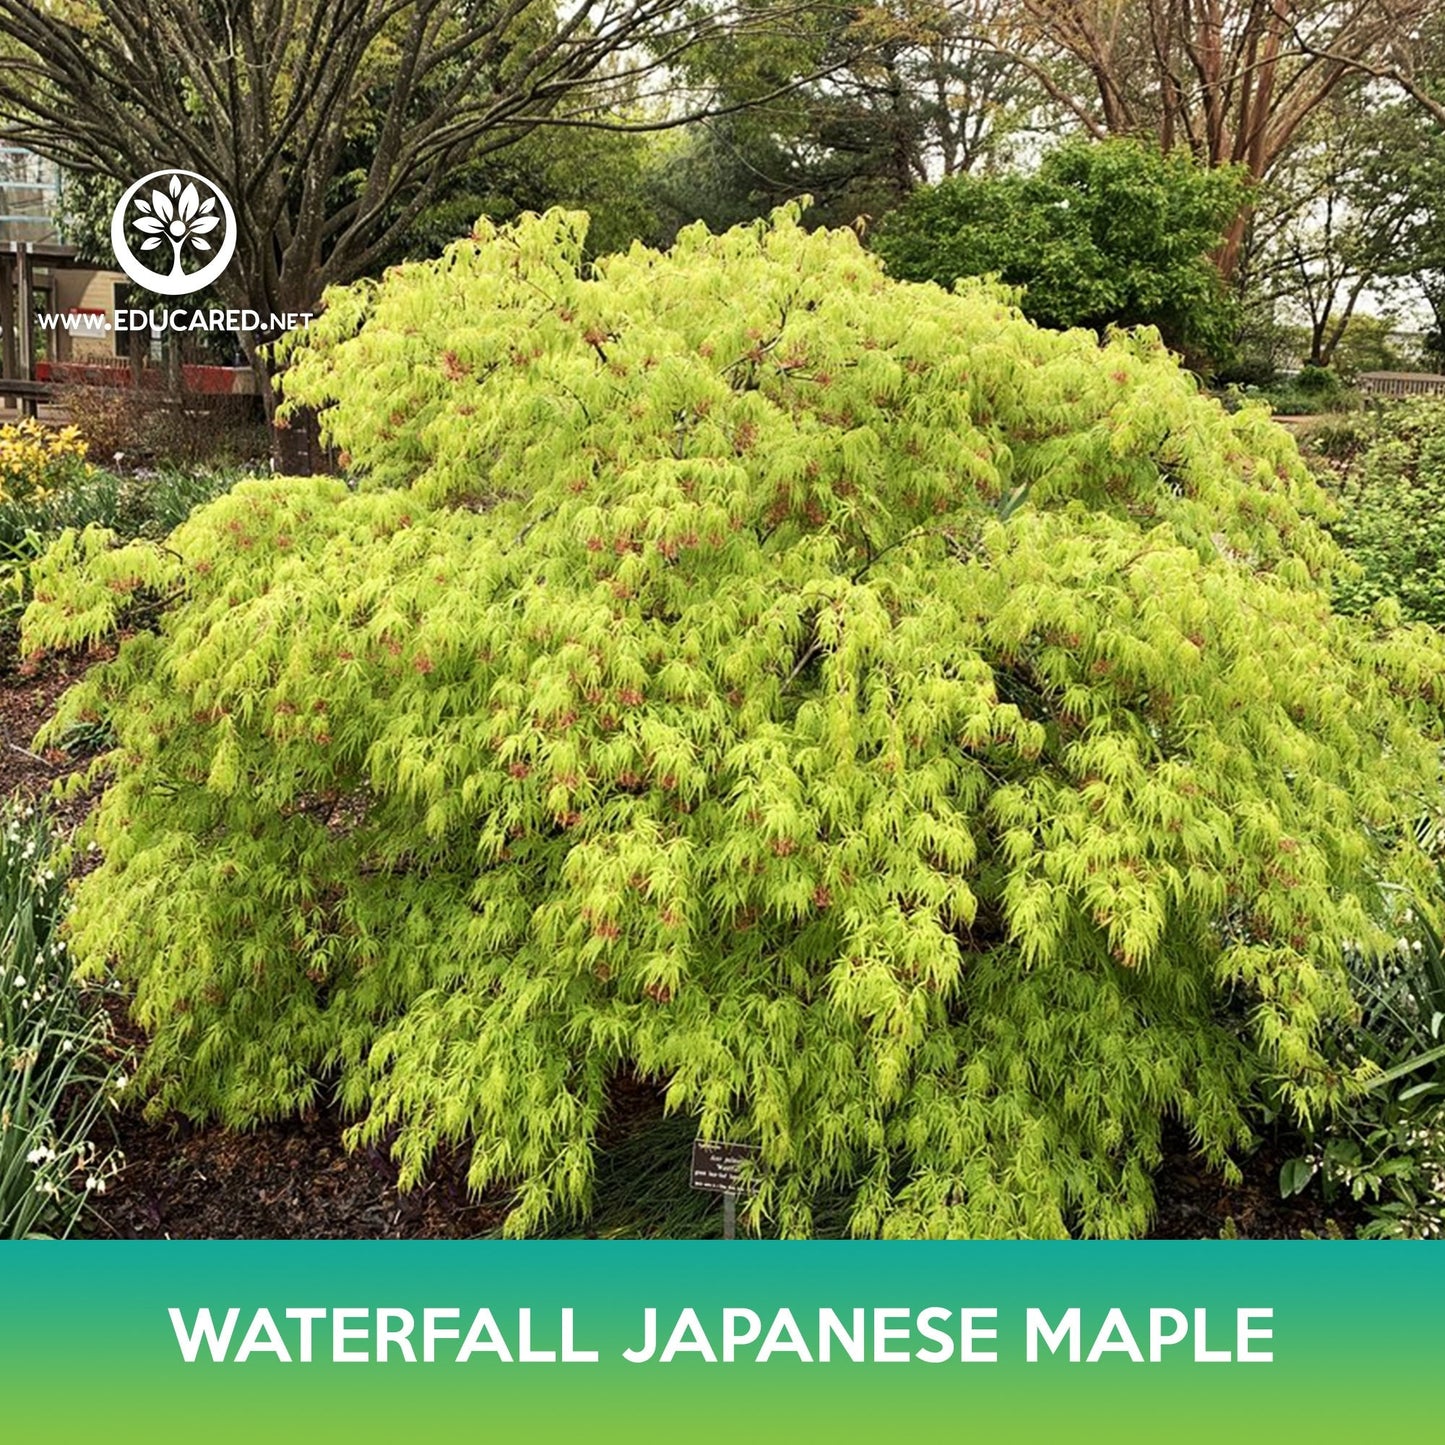 Waterfall Japanese Maple Seeds, Acer palmatum waterfall